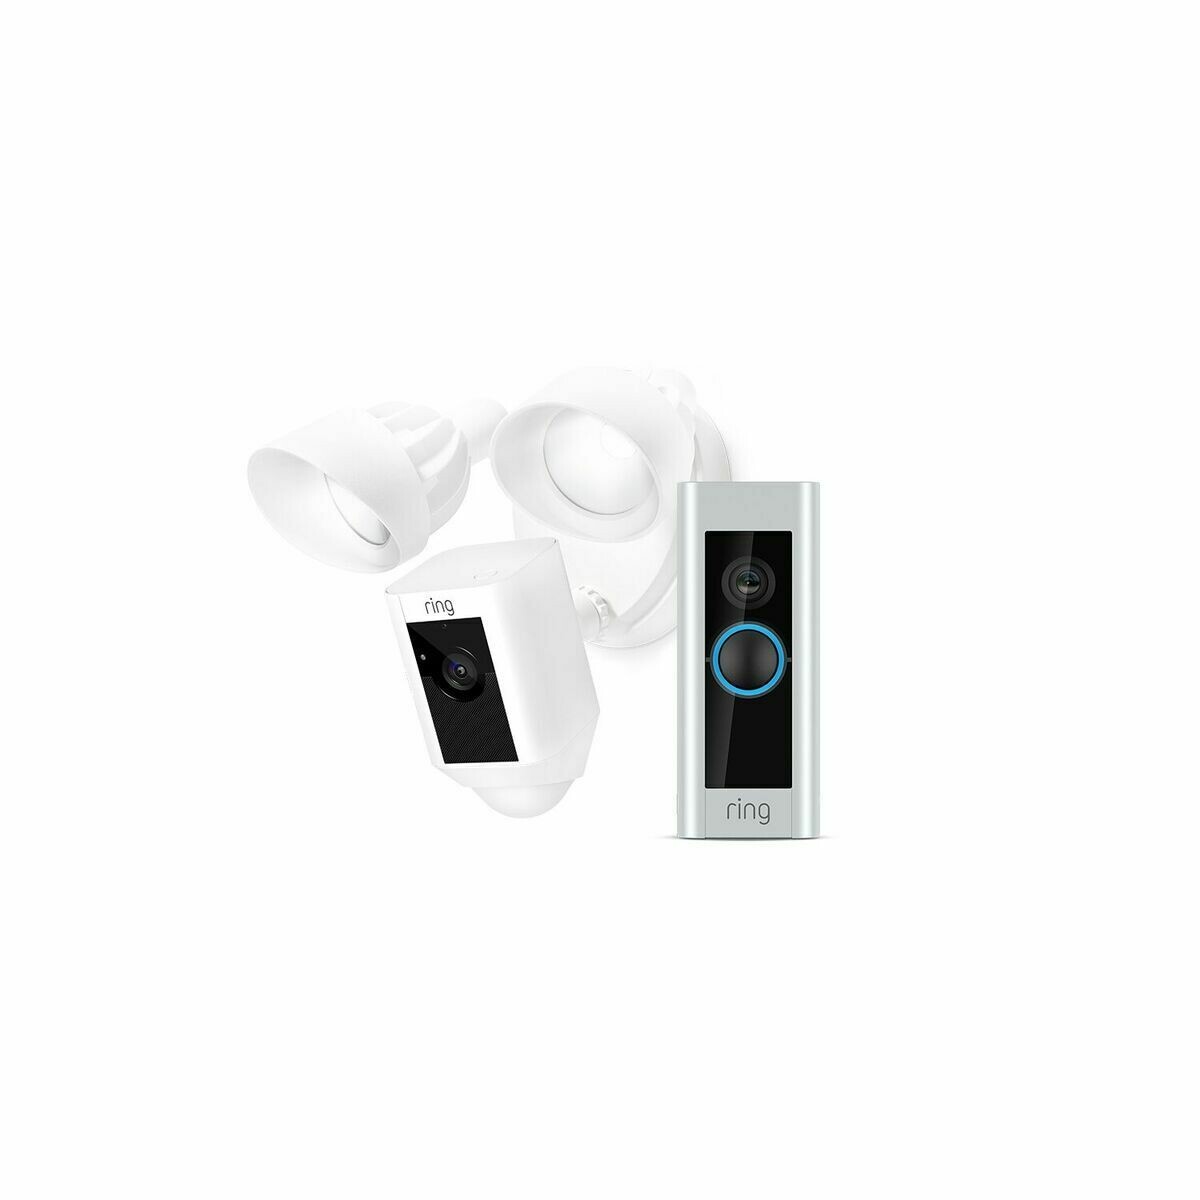 Ring Video Doorbell Pro + Floodlight
*installed and programmed